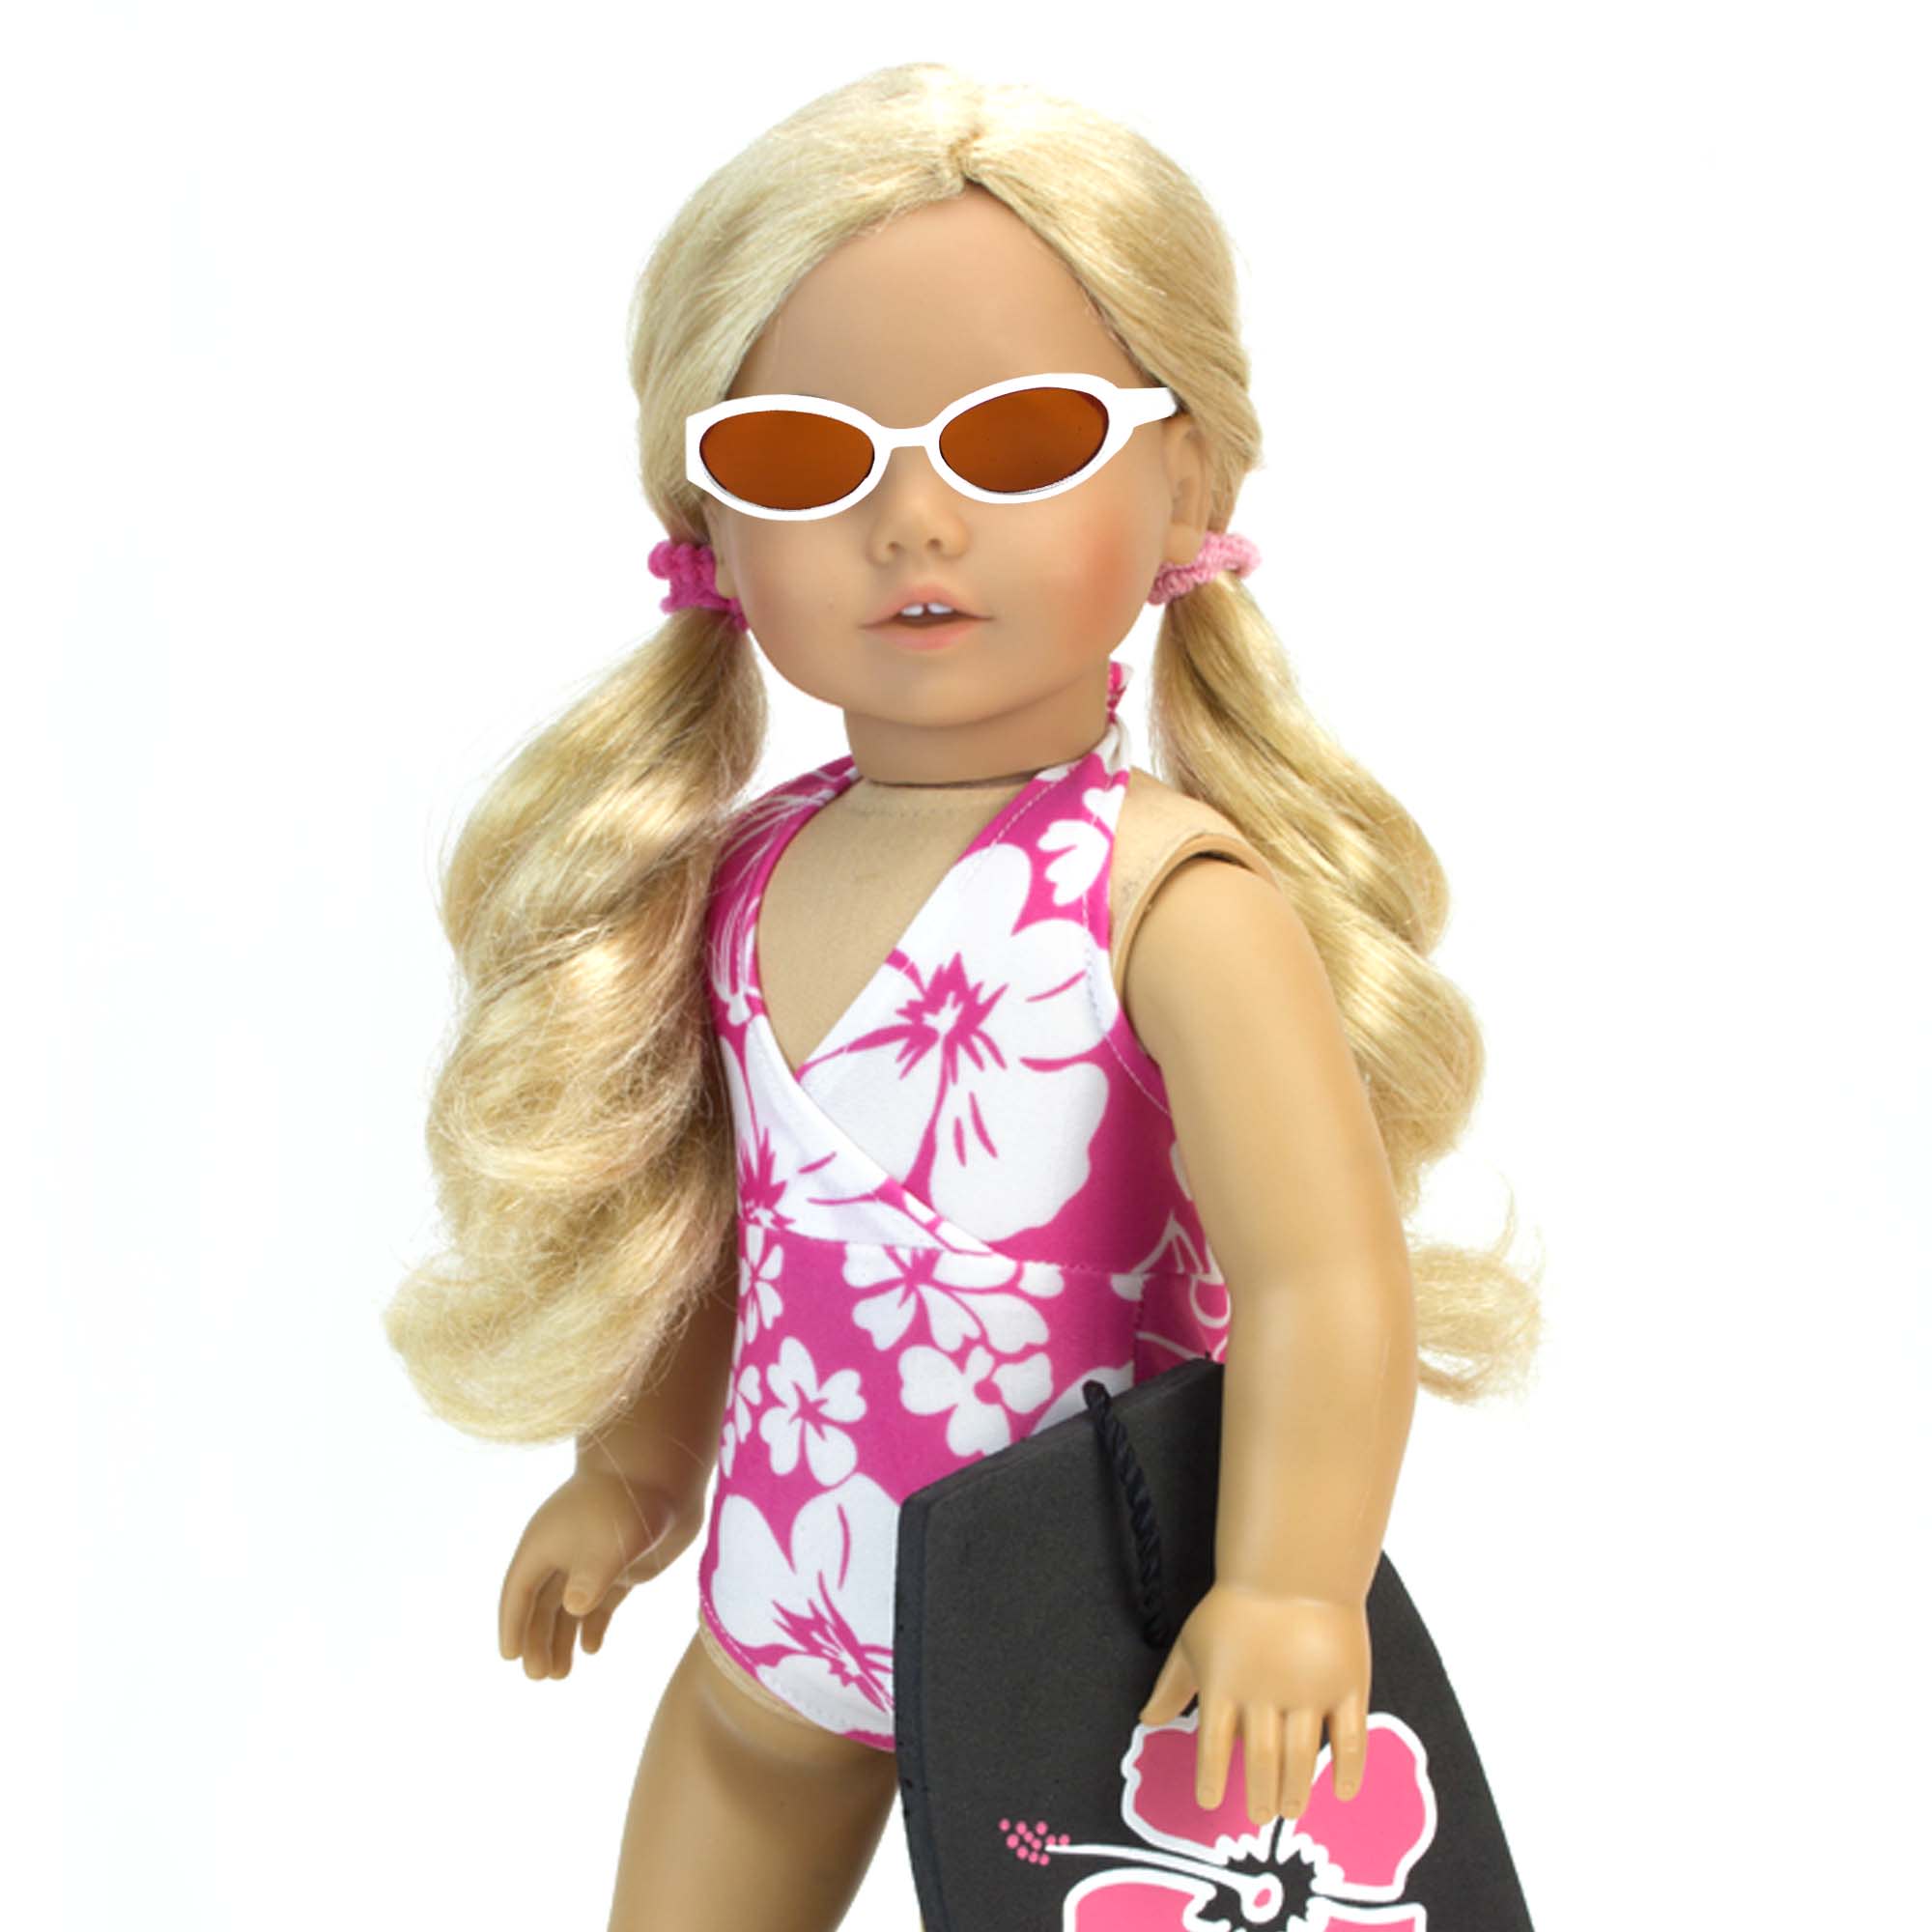 Sophia’s Stylish Gender-Neutral Solid-Colored Classic Wayfarer-Inspired Plastic Frame Sunglasses Accessory for 18” Dolls, White